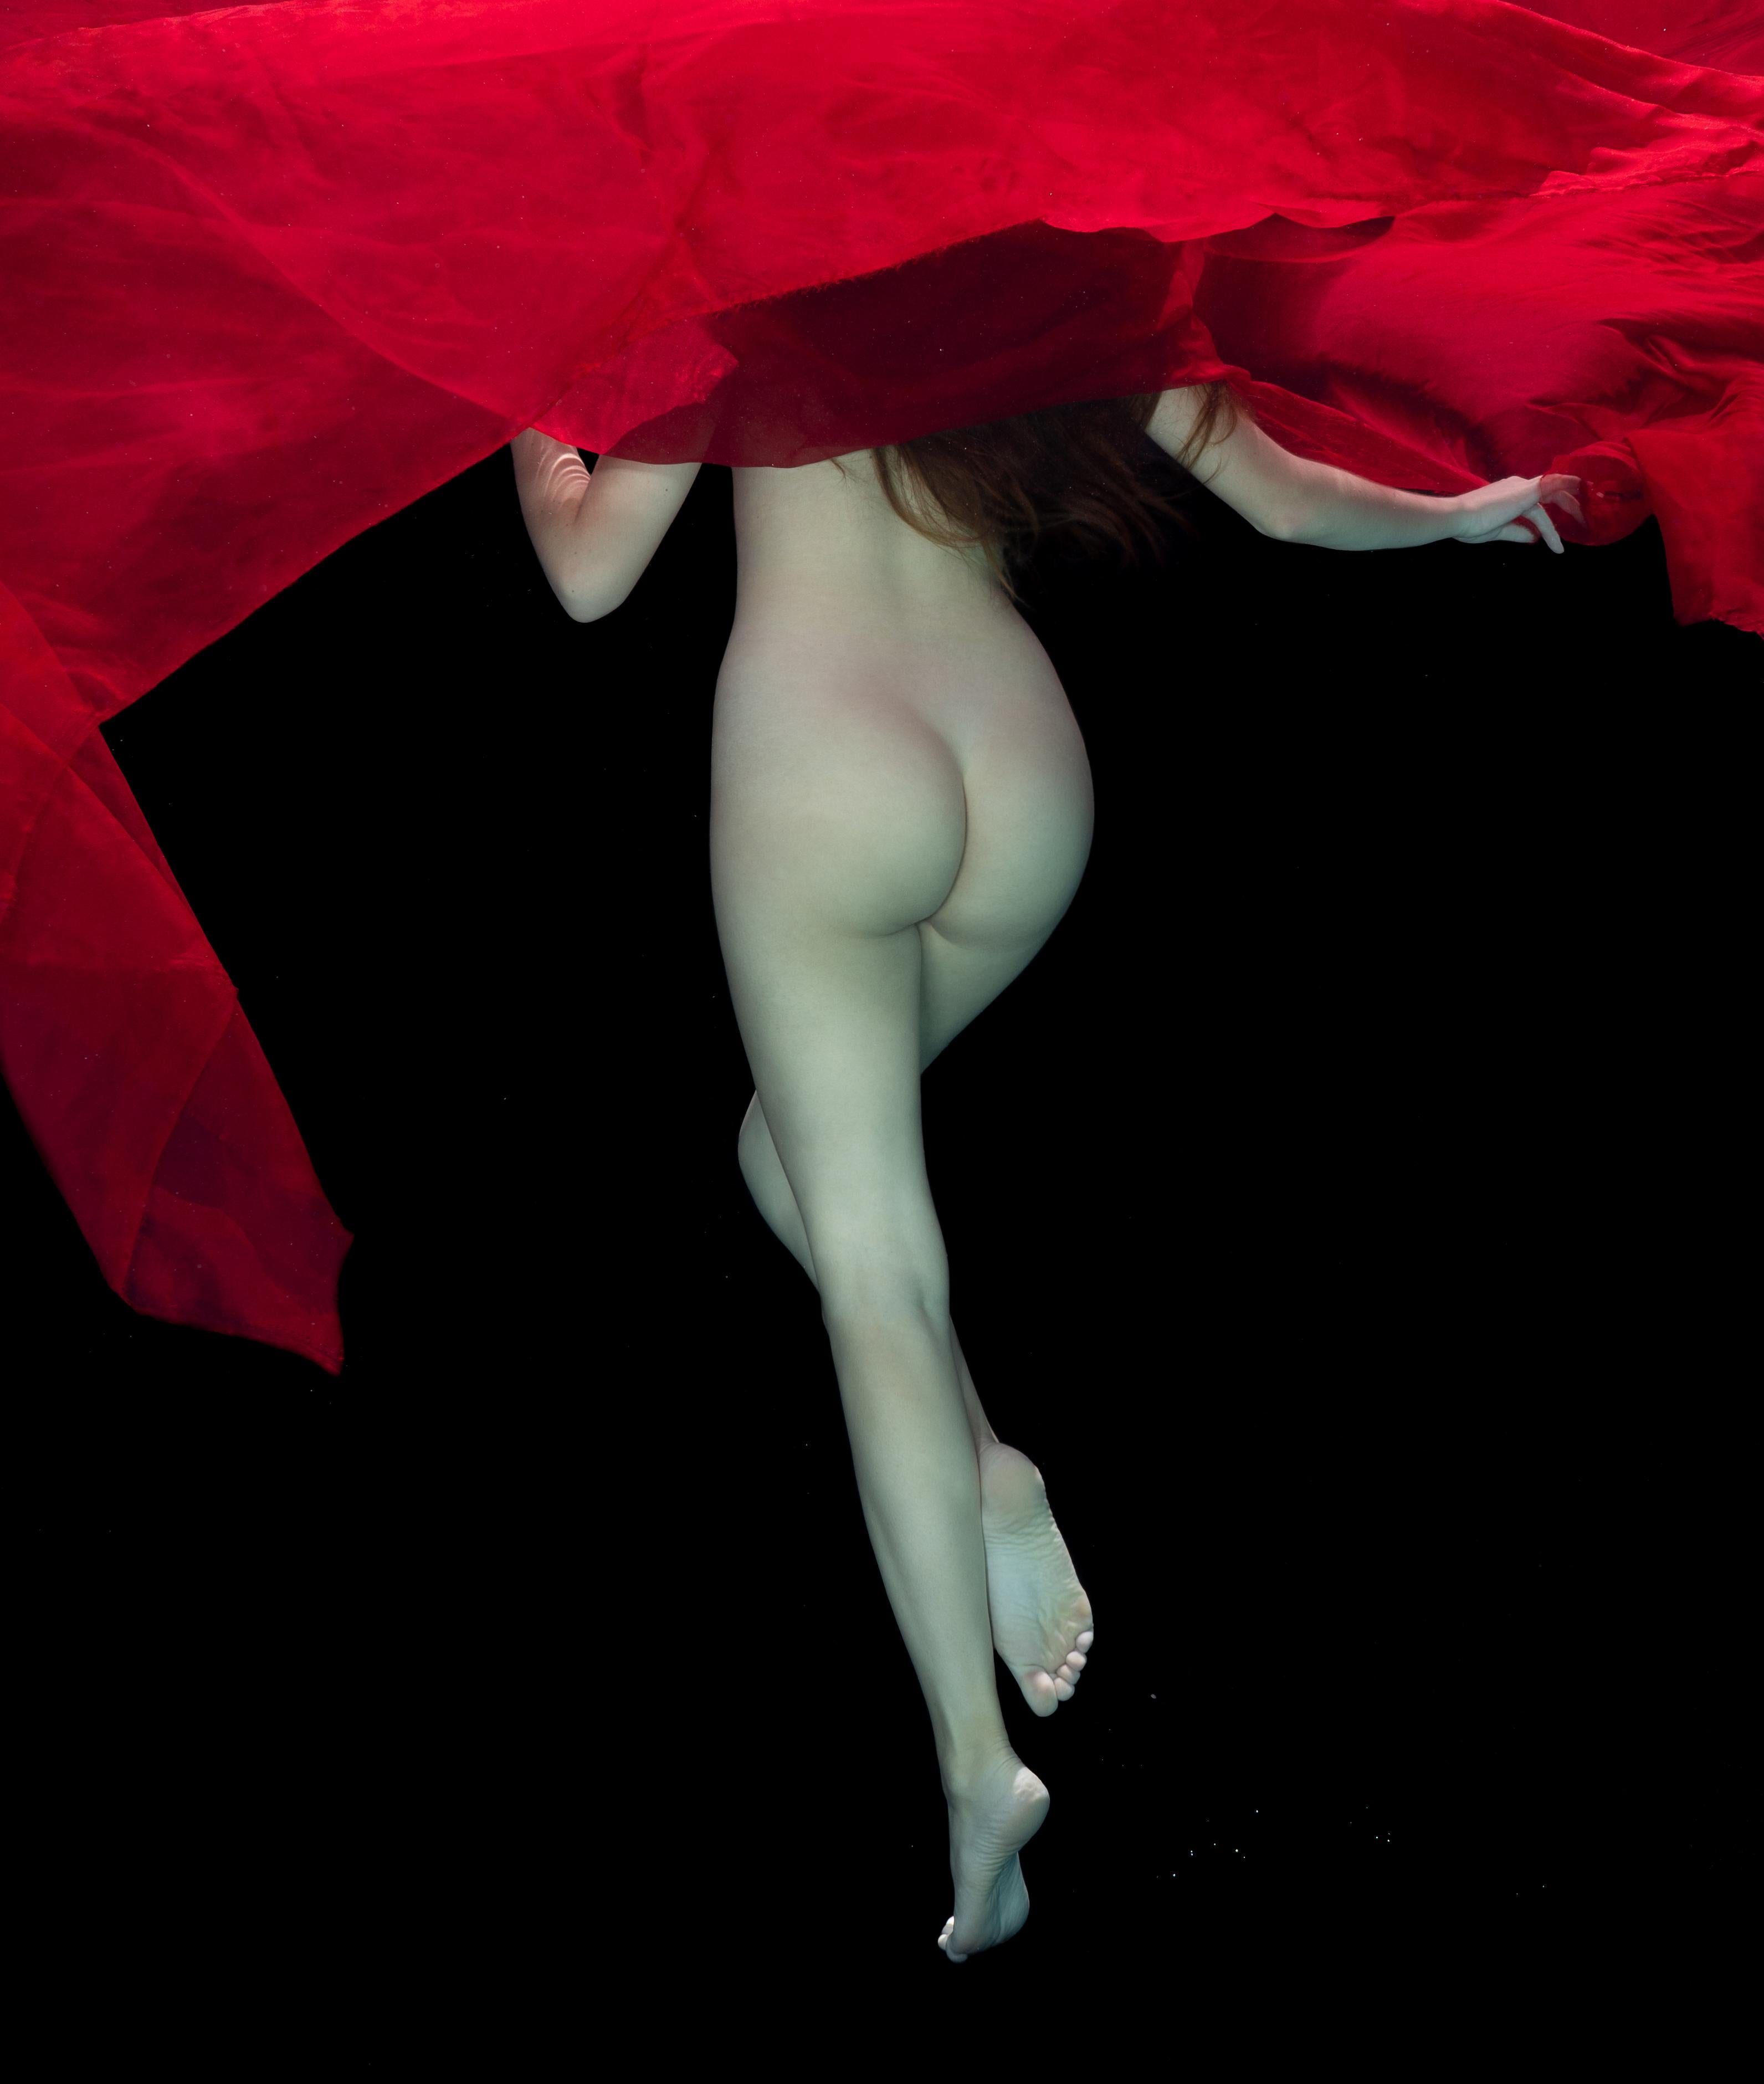 Hibiscus - underwater nude photograph - archival pigment print 43